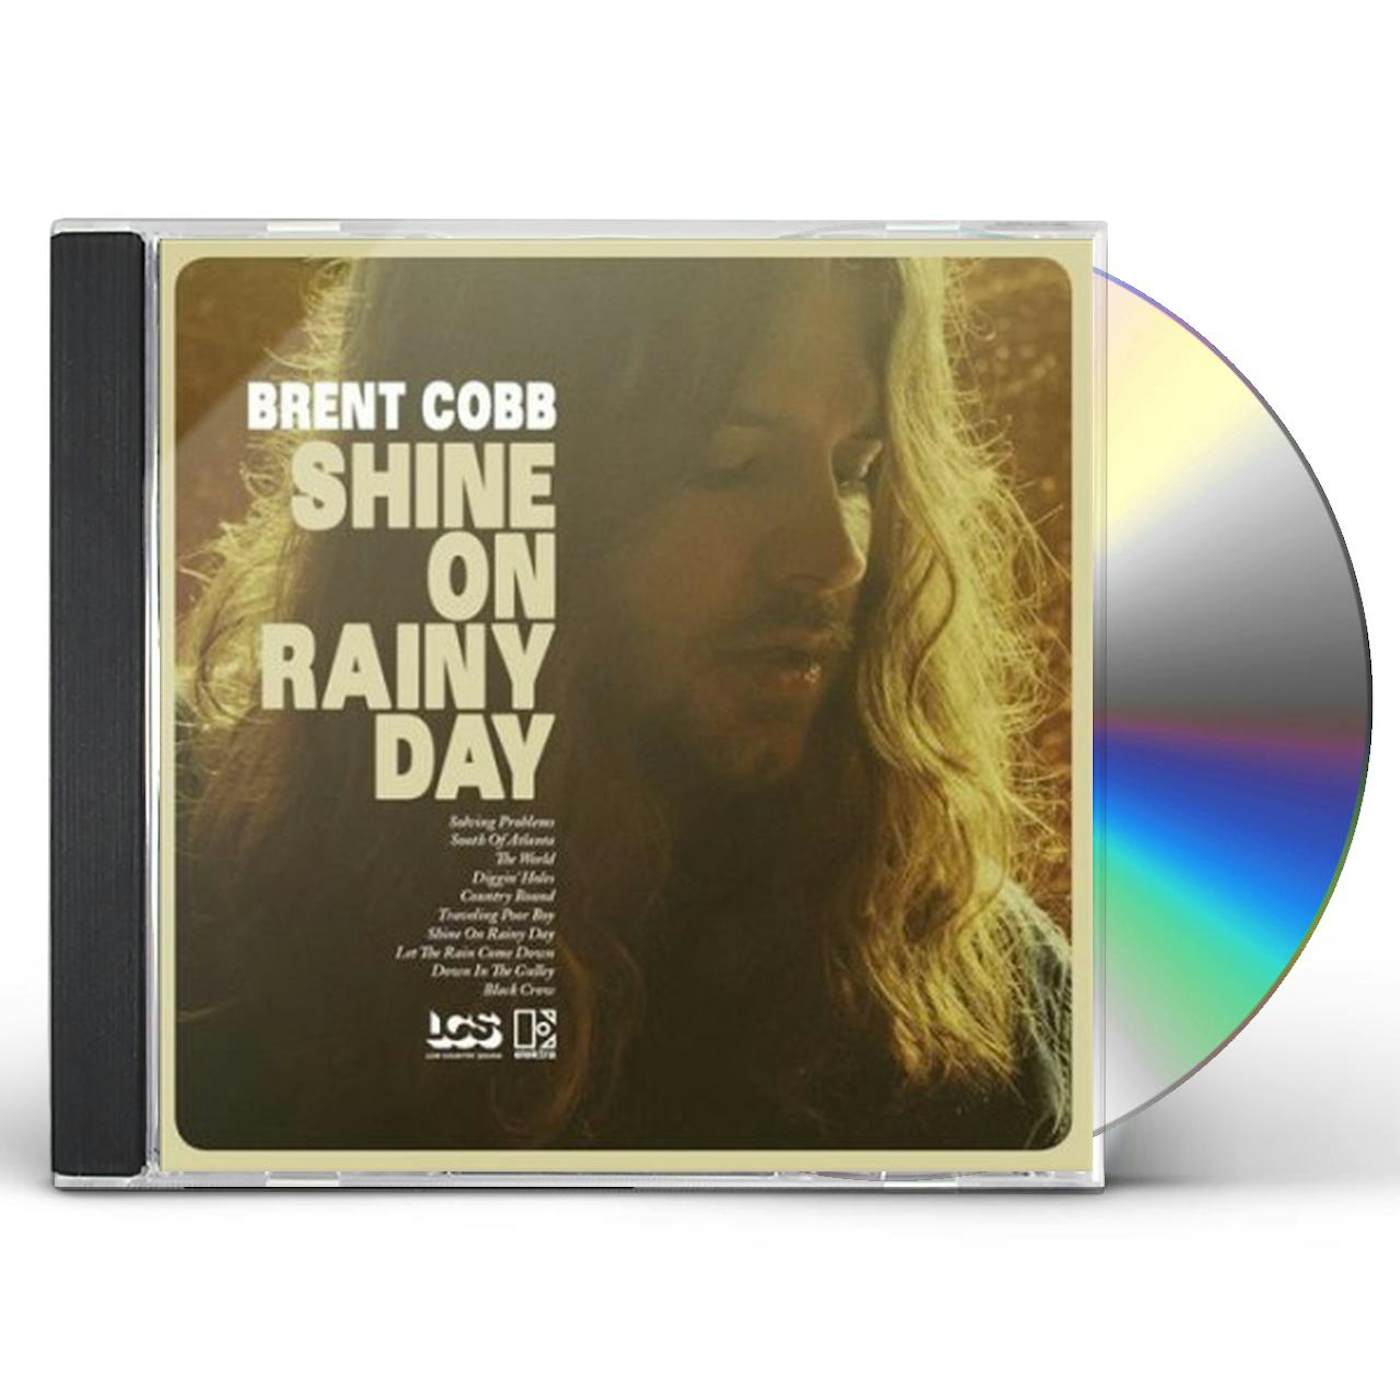 Brent Cobb SHINE ON RAINY DAY CD